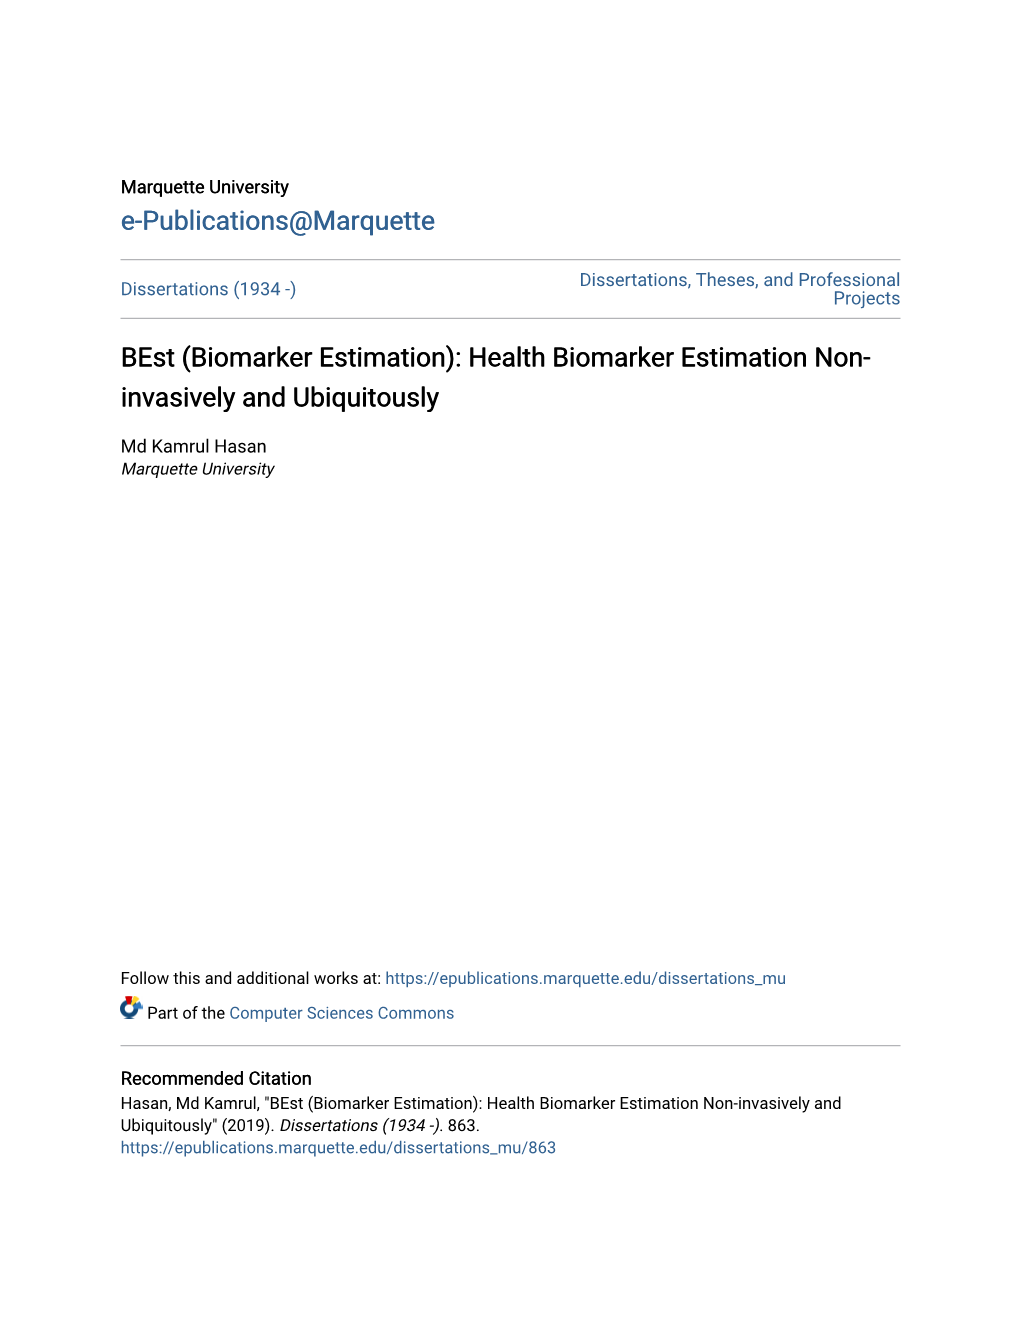 Biomarker Estimation): Health Biomarker Estimation Non- Invasively and Ubiquitously